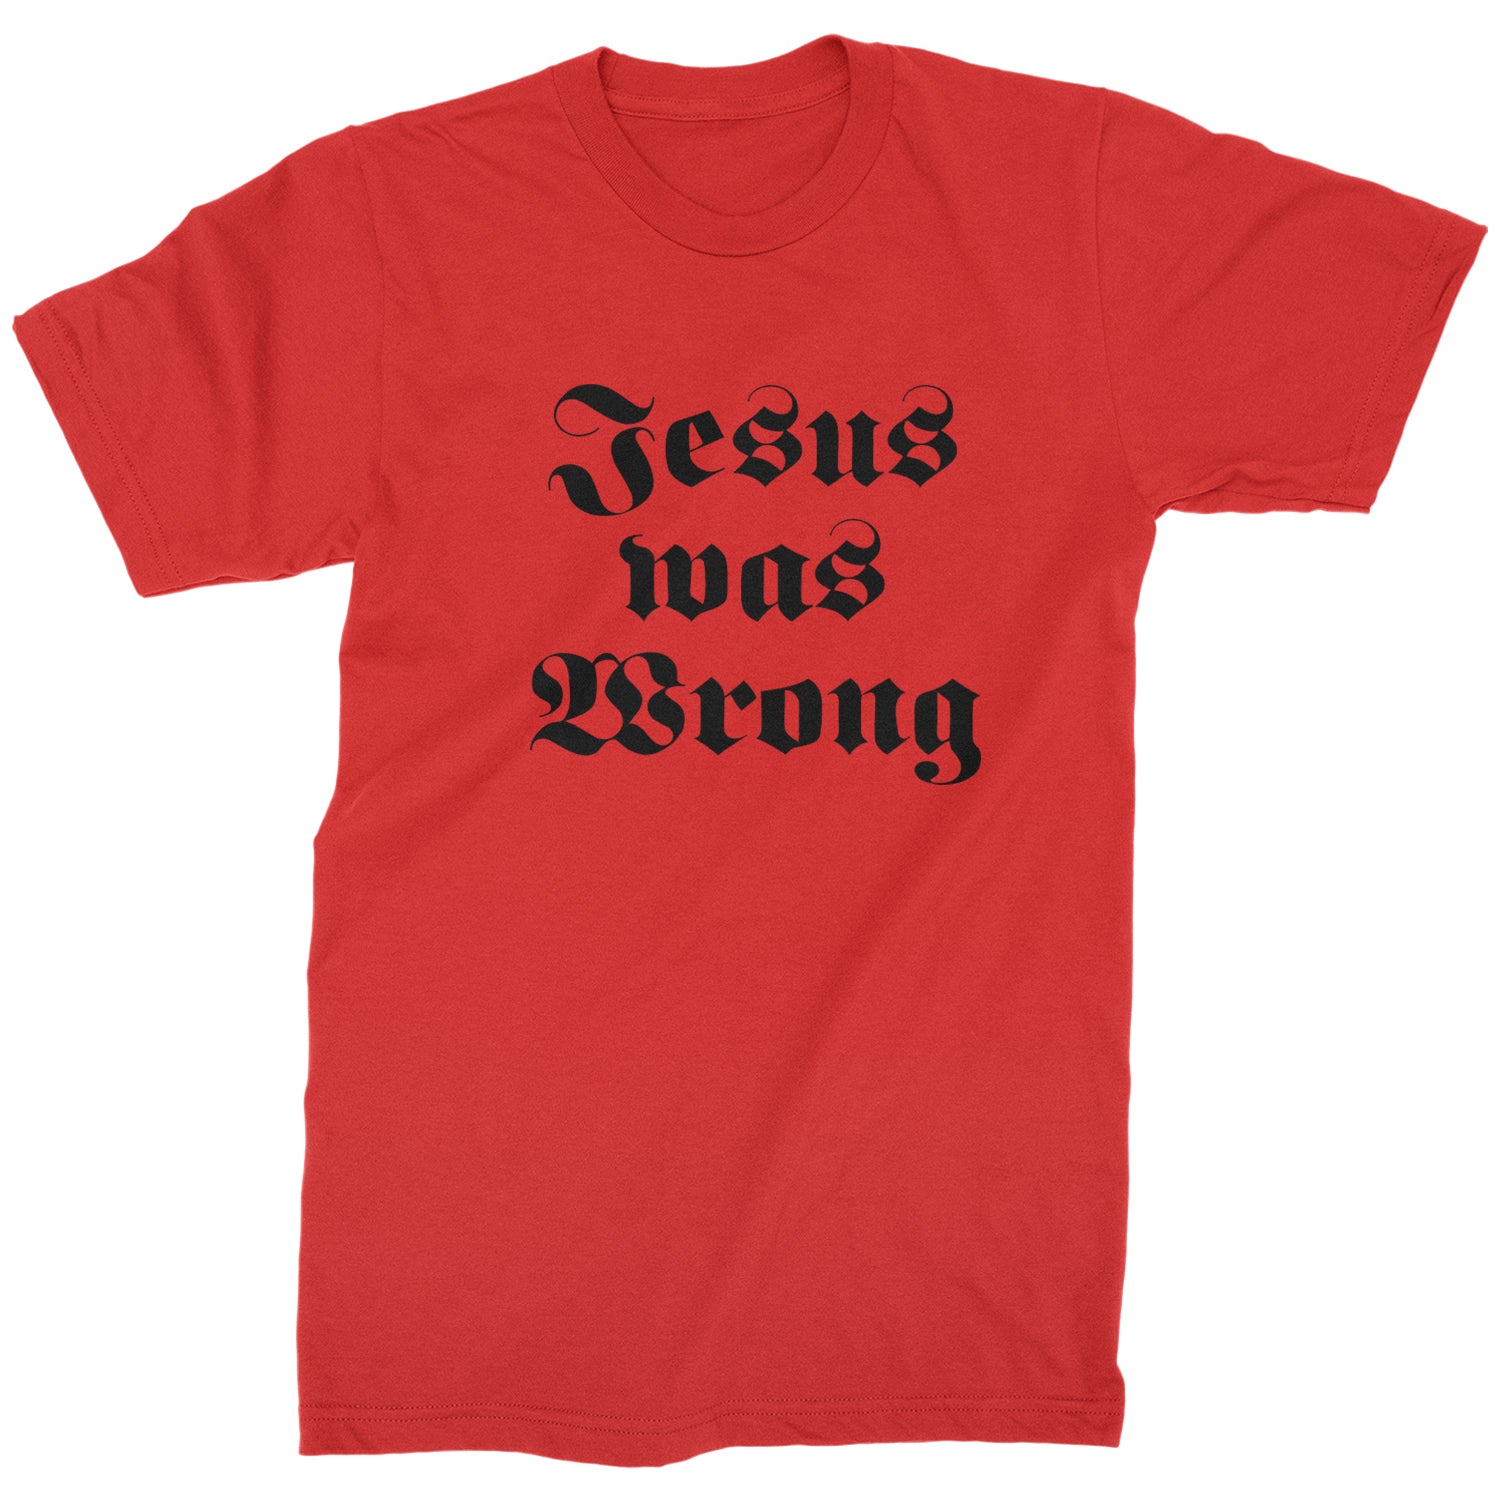 Jesus Was Wrong Little Miss Sunshine Mens T-shirt breslin, dano, movie, paul, shine, shirt, sun by Expression Tees